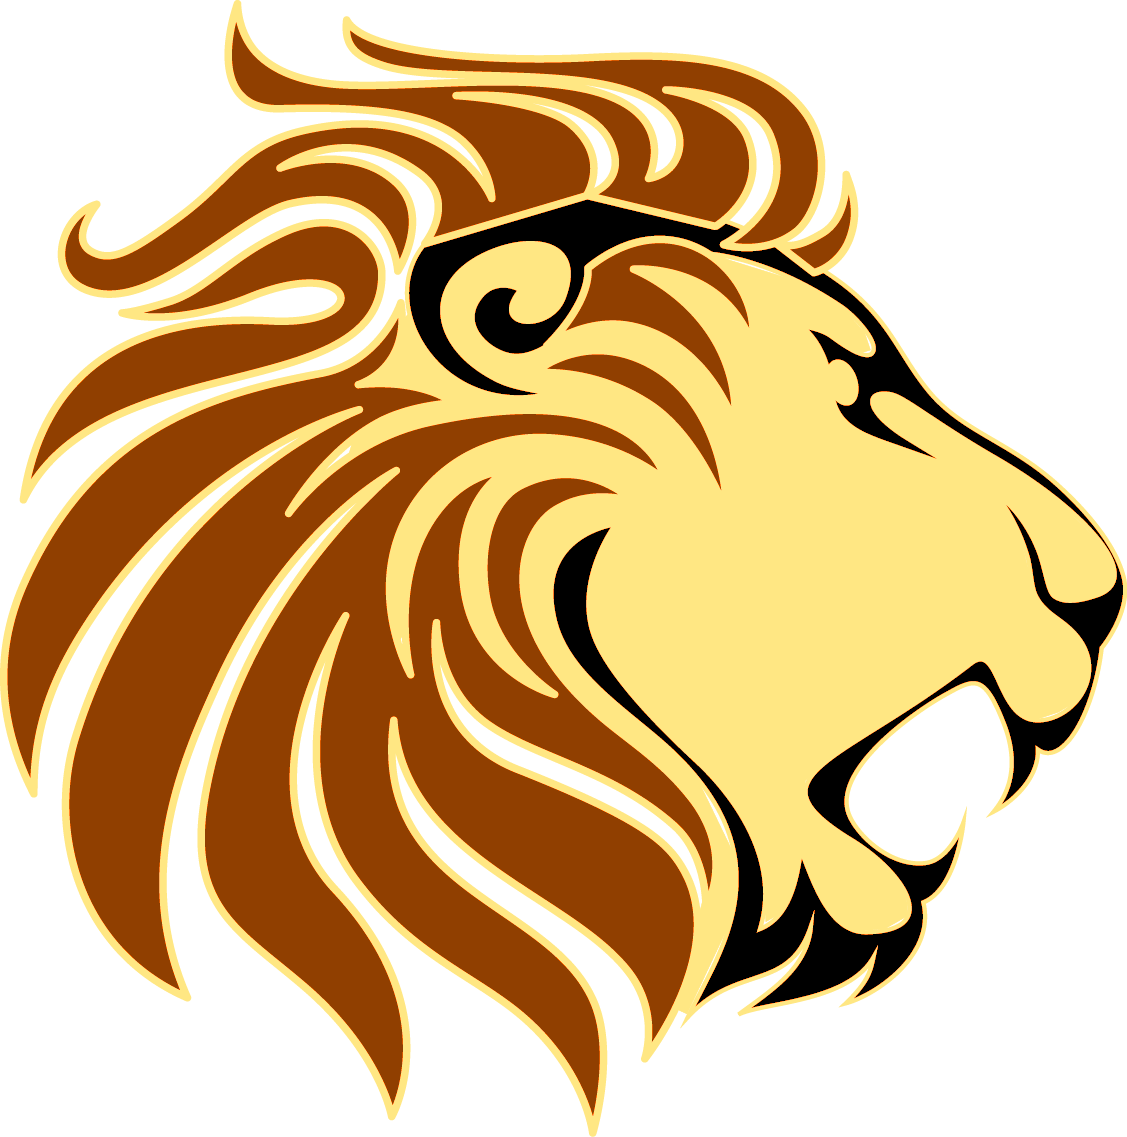 lion logo manish abraham manish abraham #33398